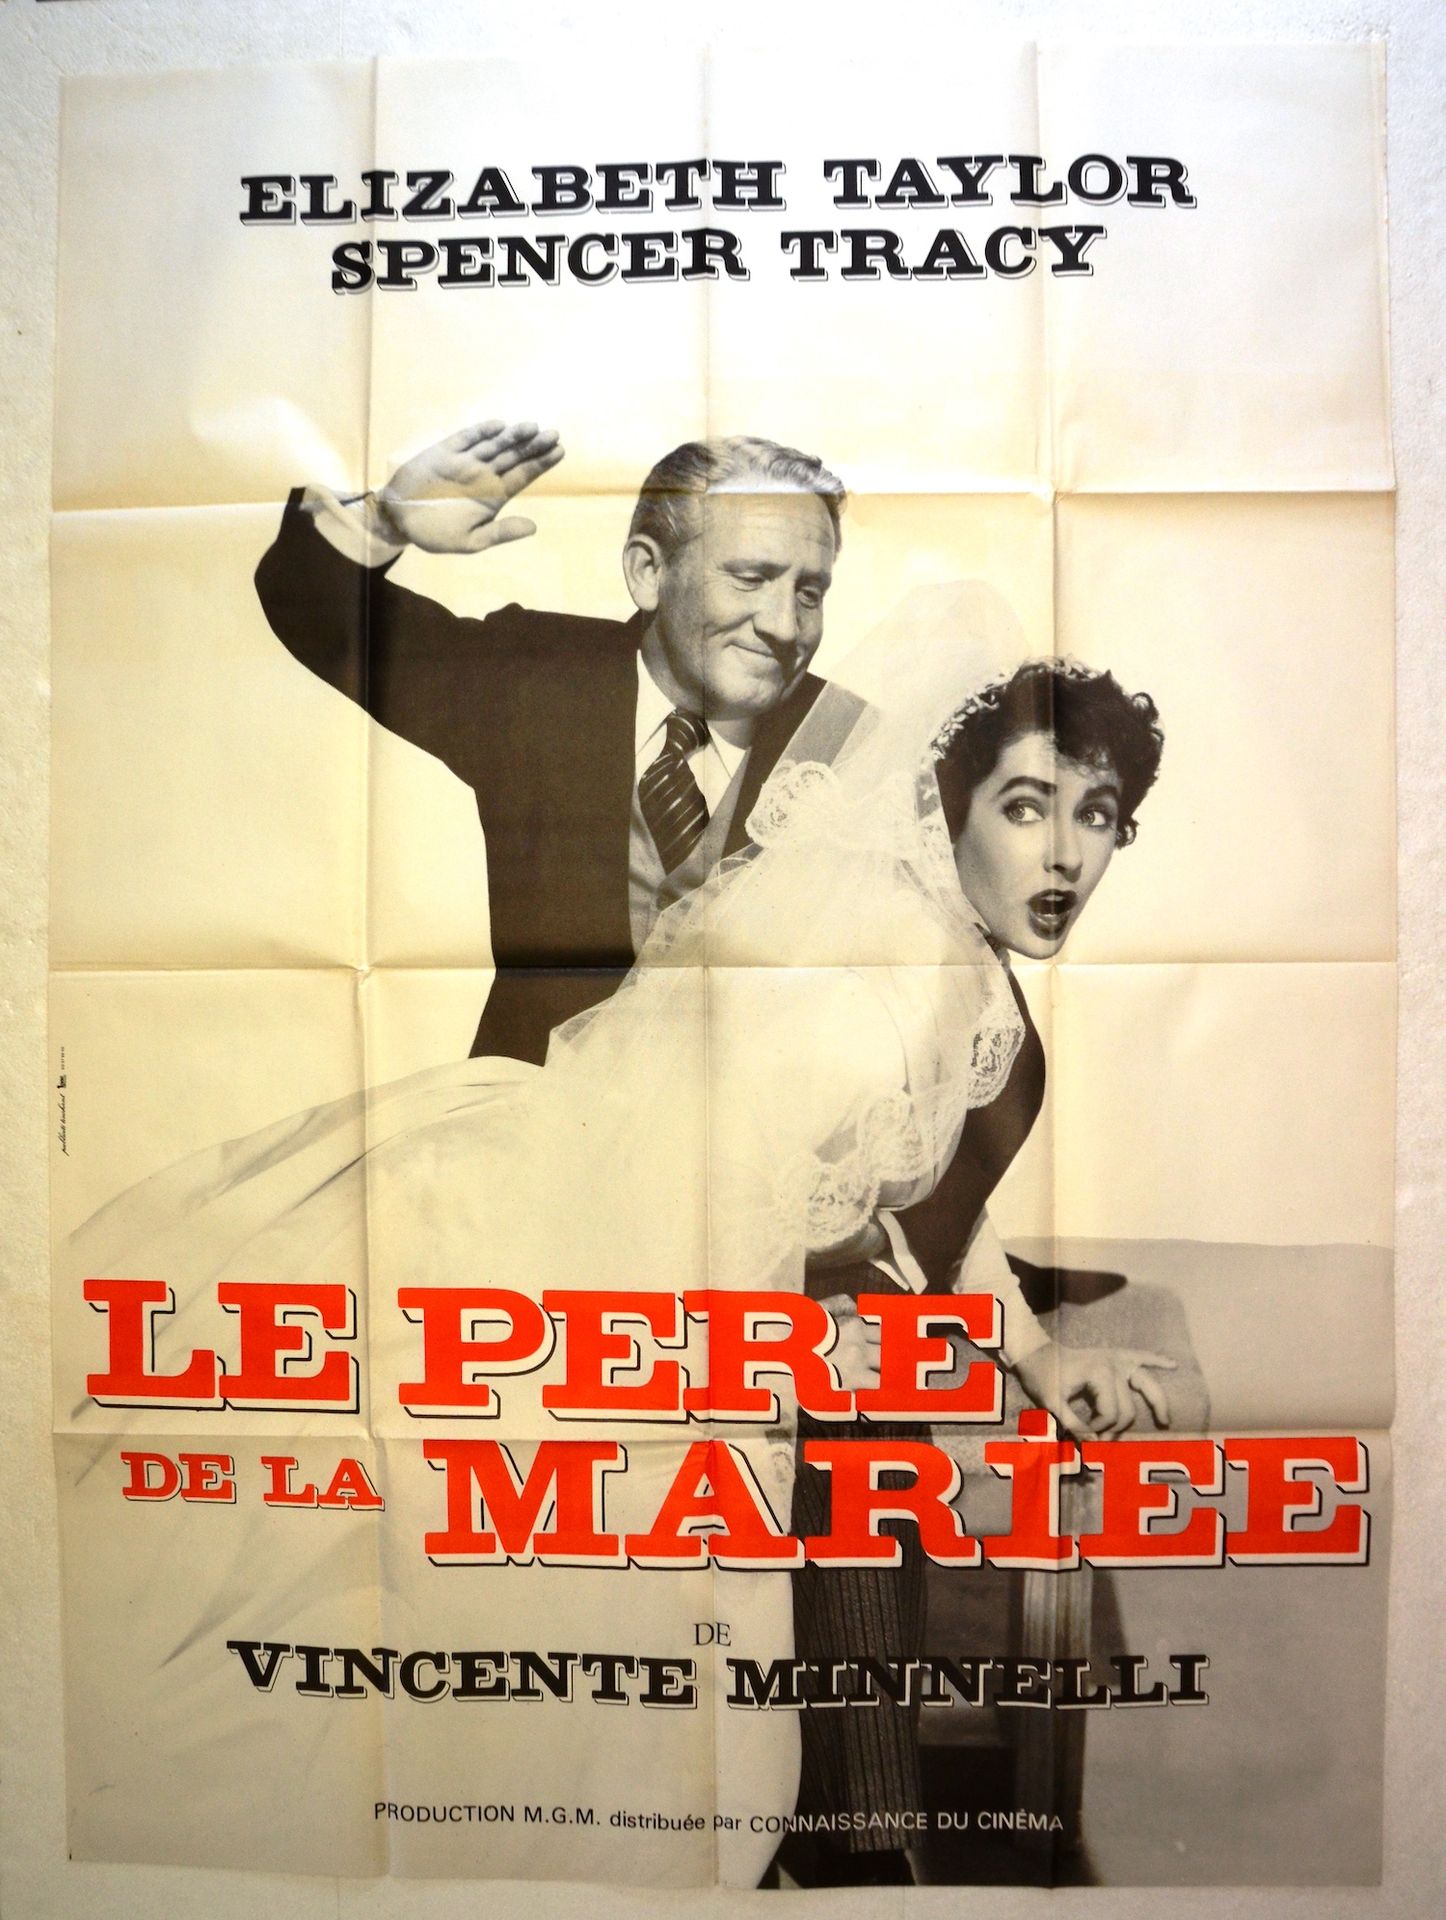 Null EL PADRE DE LA NOVIA
Año: 1950, cartel francés
Director: Vincente Minnelli
&hellip;